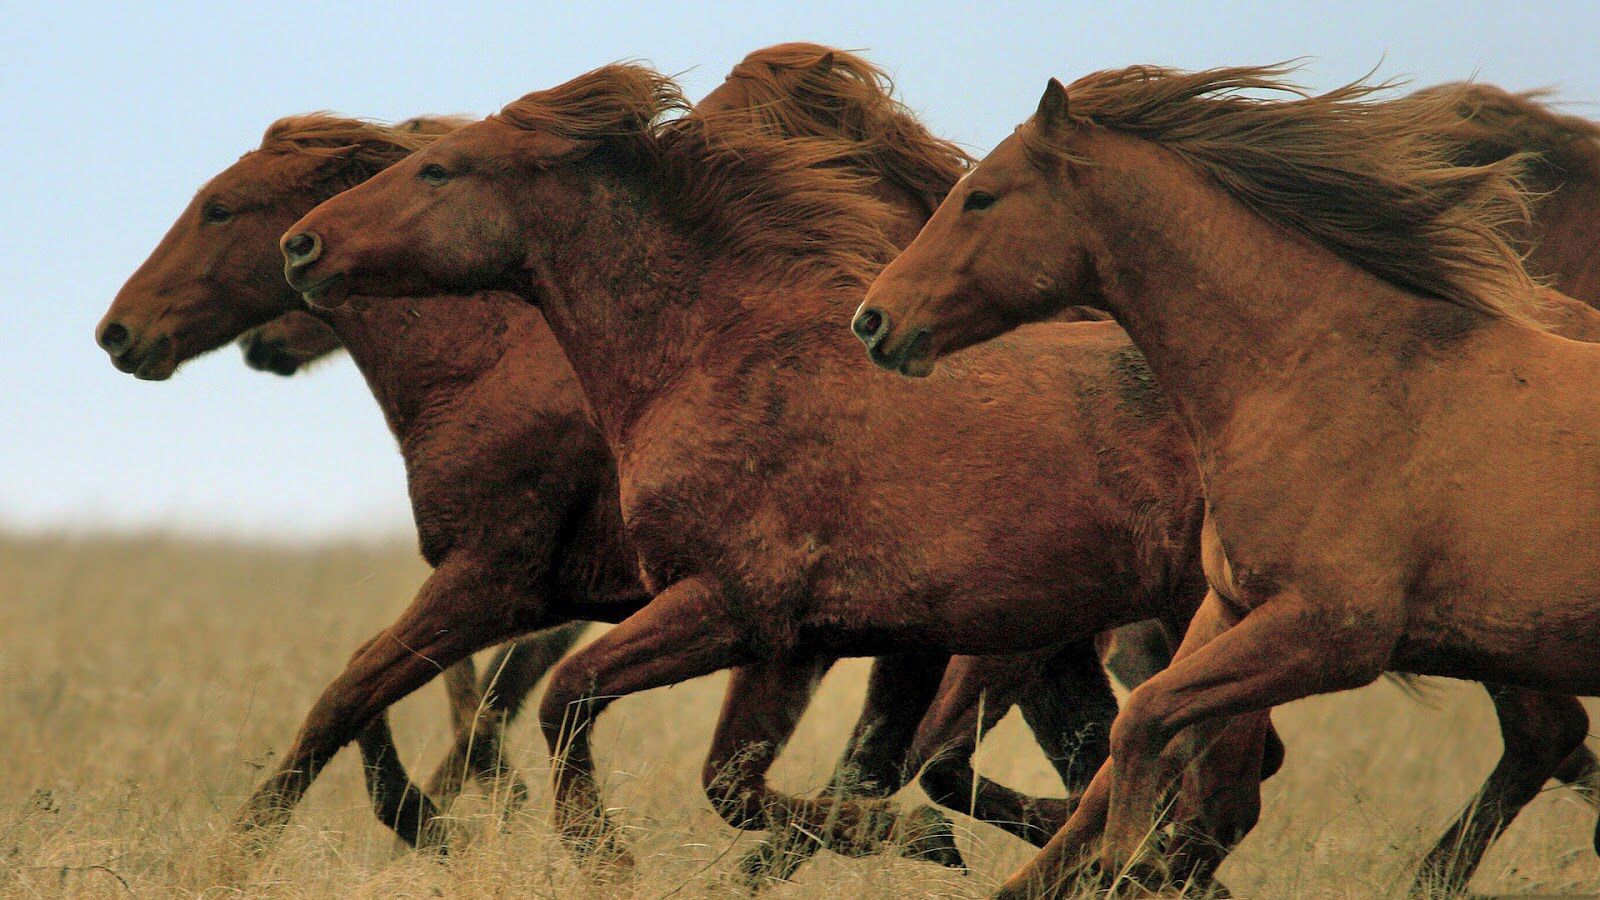 Wallpaper World: Horse Wallpaper Free Download For Deskx1080. Horses, Wild horses running, Beautiful horses